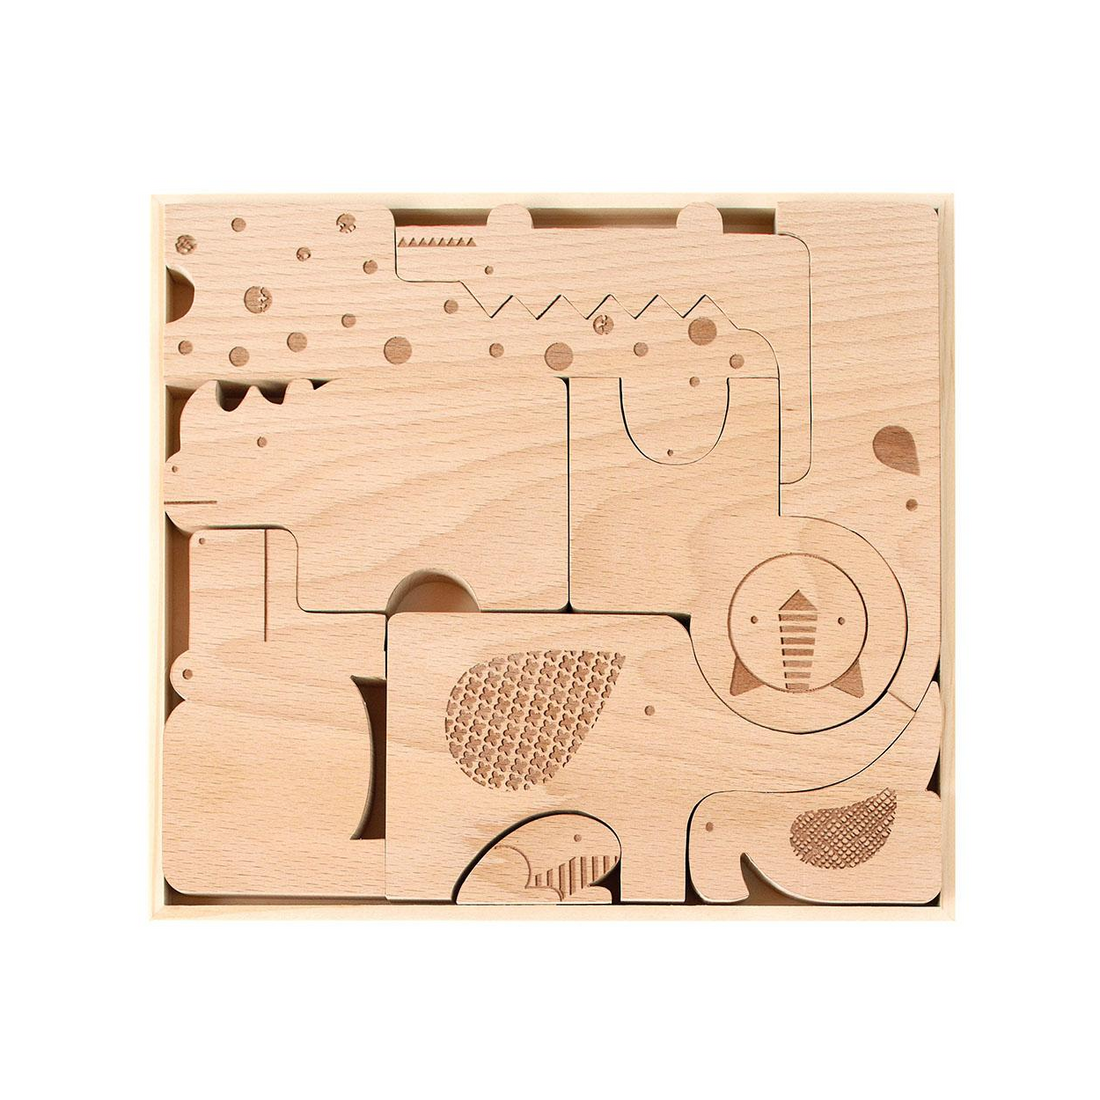 Puzzle + set de joaca - Safari Jumble - Petit Collage